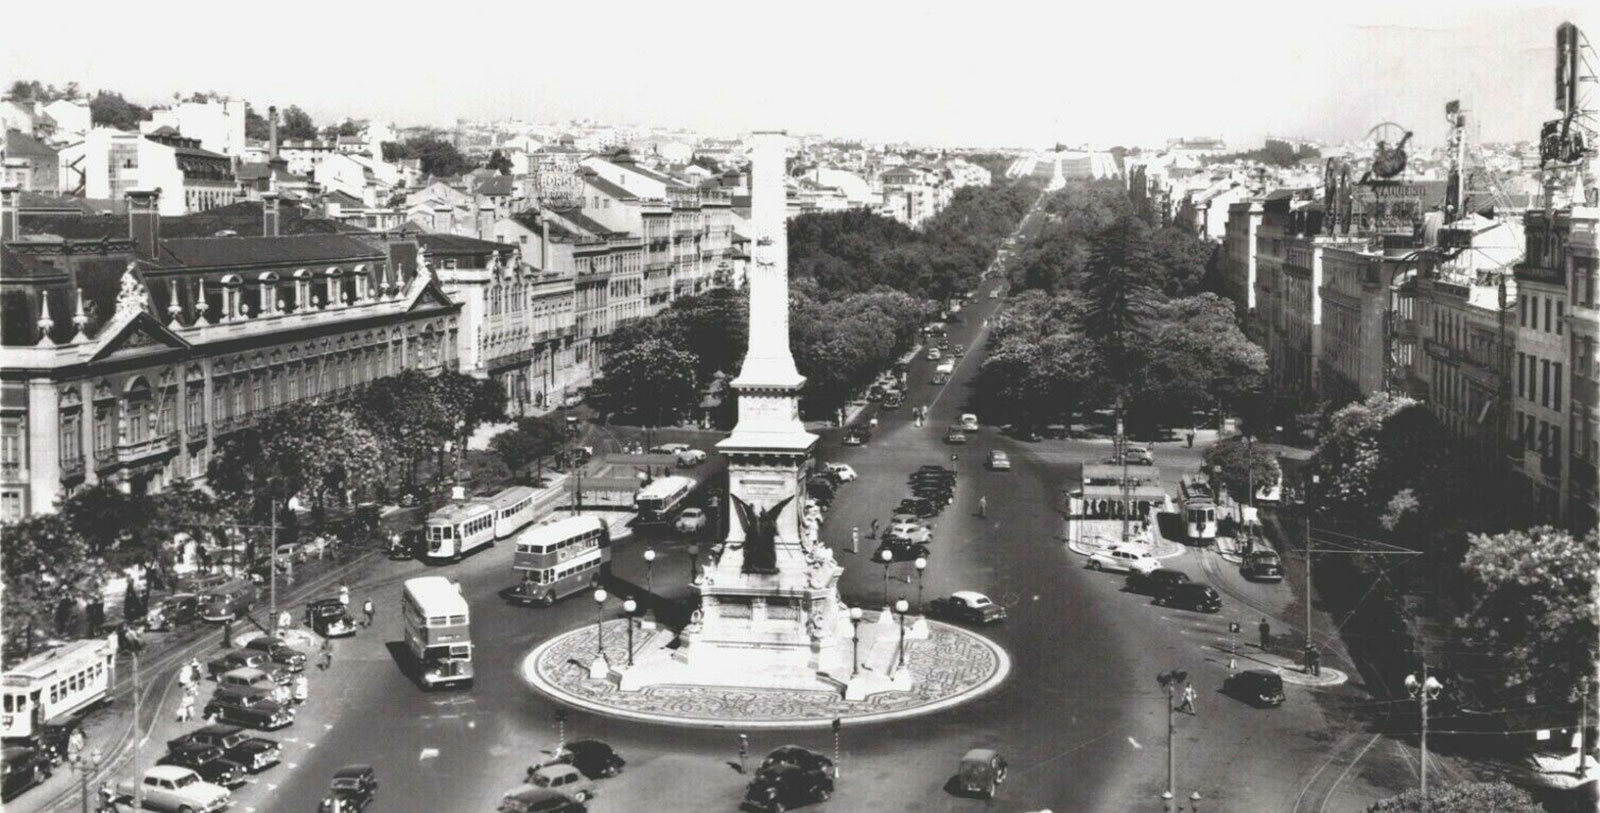 Historical image of Praça dos Restauradores, Heritage Avenida Liberdade, 18th Century, a member of Historic Hotels Worldwide in Lisbon, Portugal